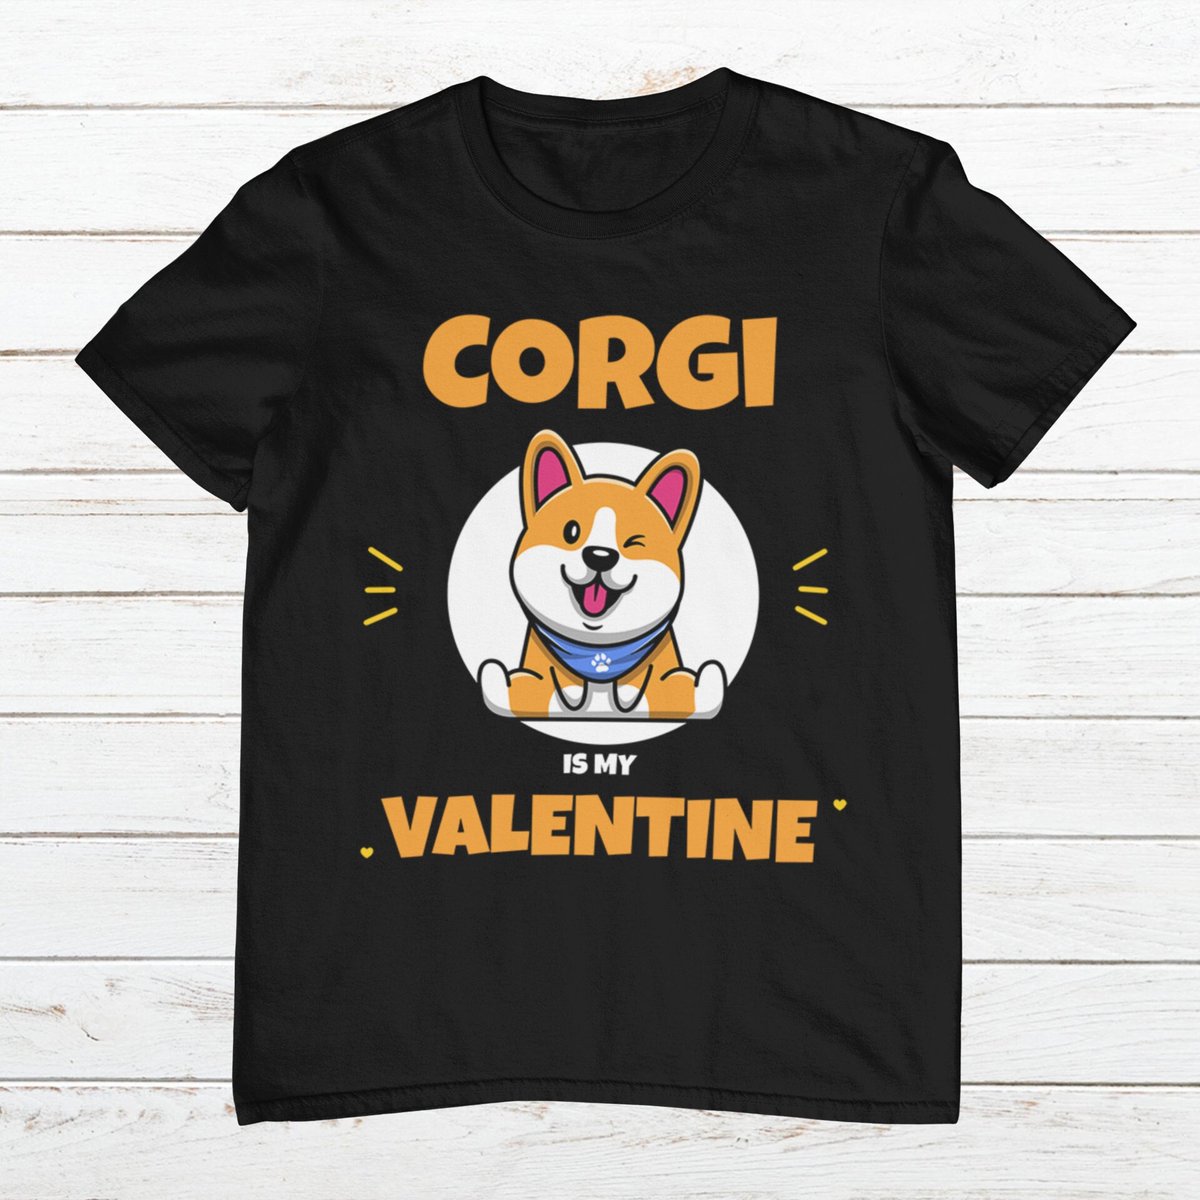 Excited to share the latest addition to my #etsy shop: Corgi is my valentine shirt, Corgi valentines t shirt, valentines t-shirt for corgi lover, corgis gift for valentine's day etsy.me/3IogfR0 #streetwear #shortsleeve #crew #corgi #myvalentine #corgitshirt #co